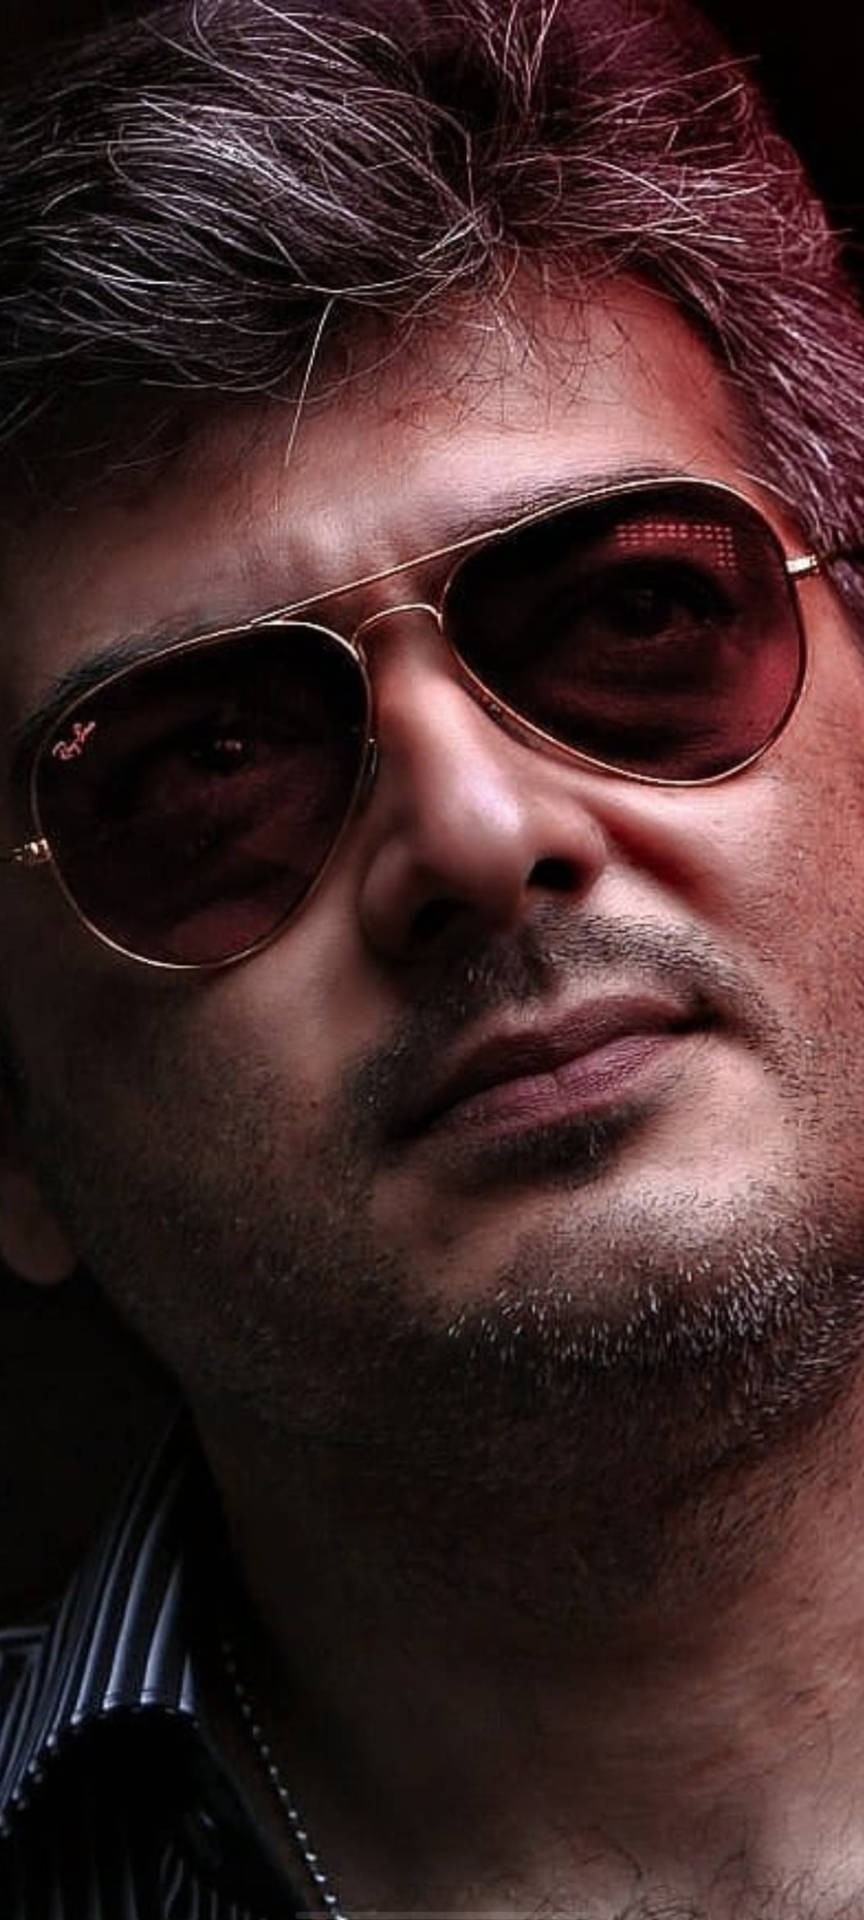 Thala Ajith With Sunglasses